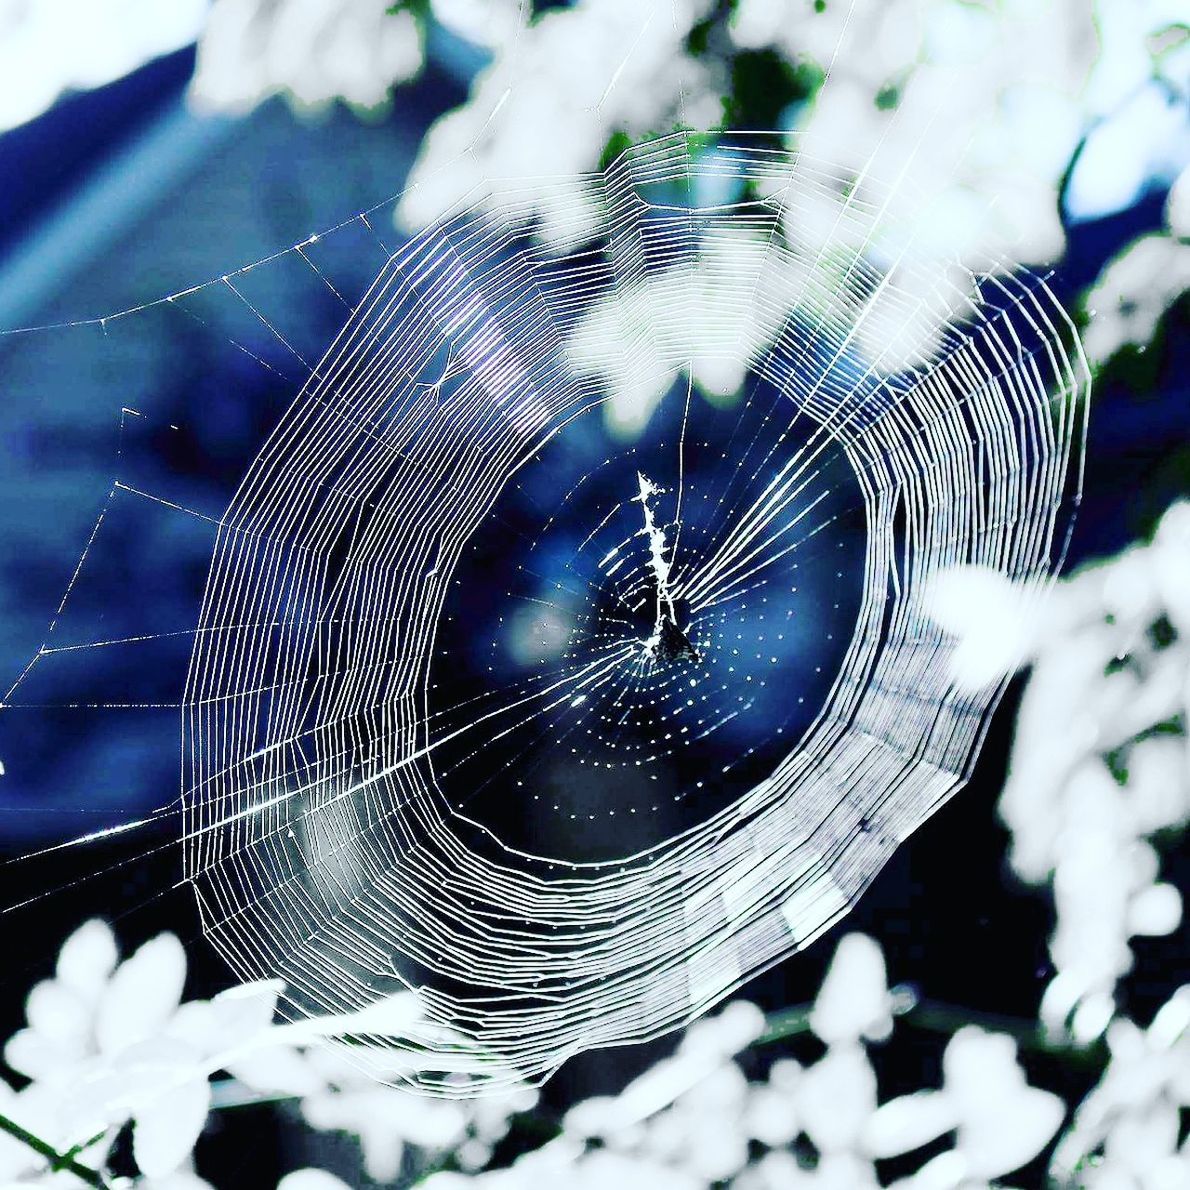 CLOSE-UP OF SPIDER WEB ON TREE